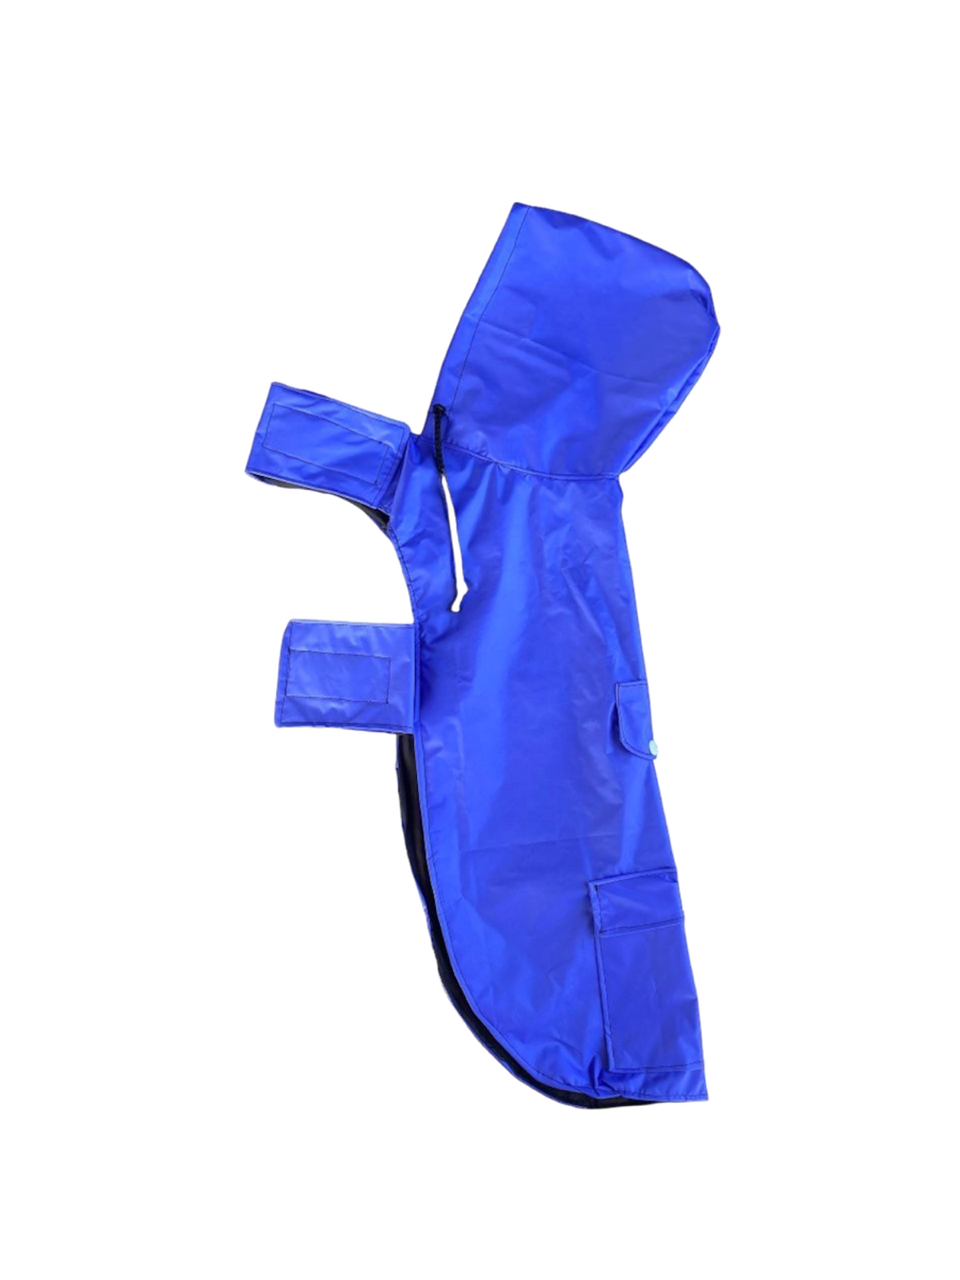 Capa Impermeable Azul Capa-0001 costa rica prendas para mascota